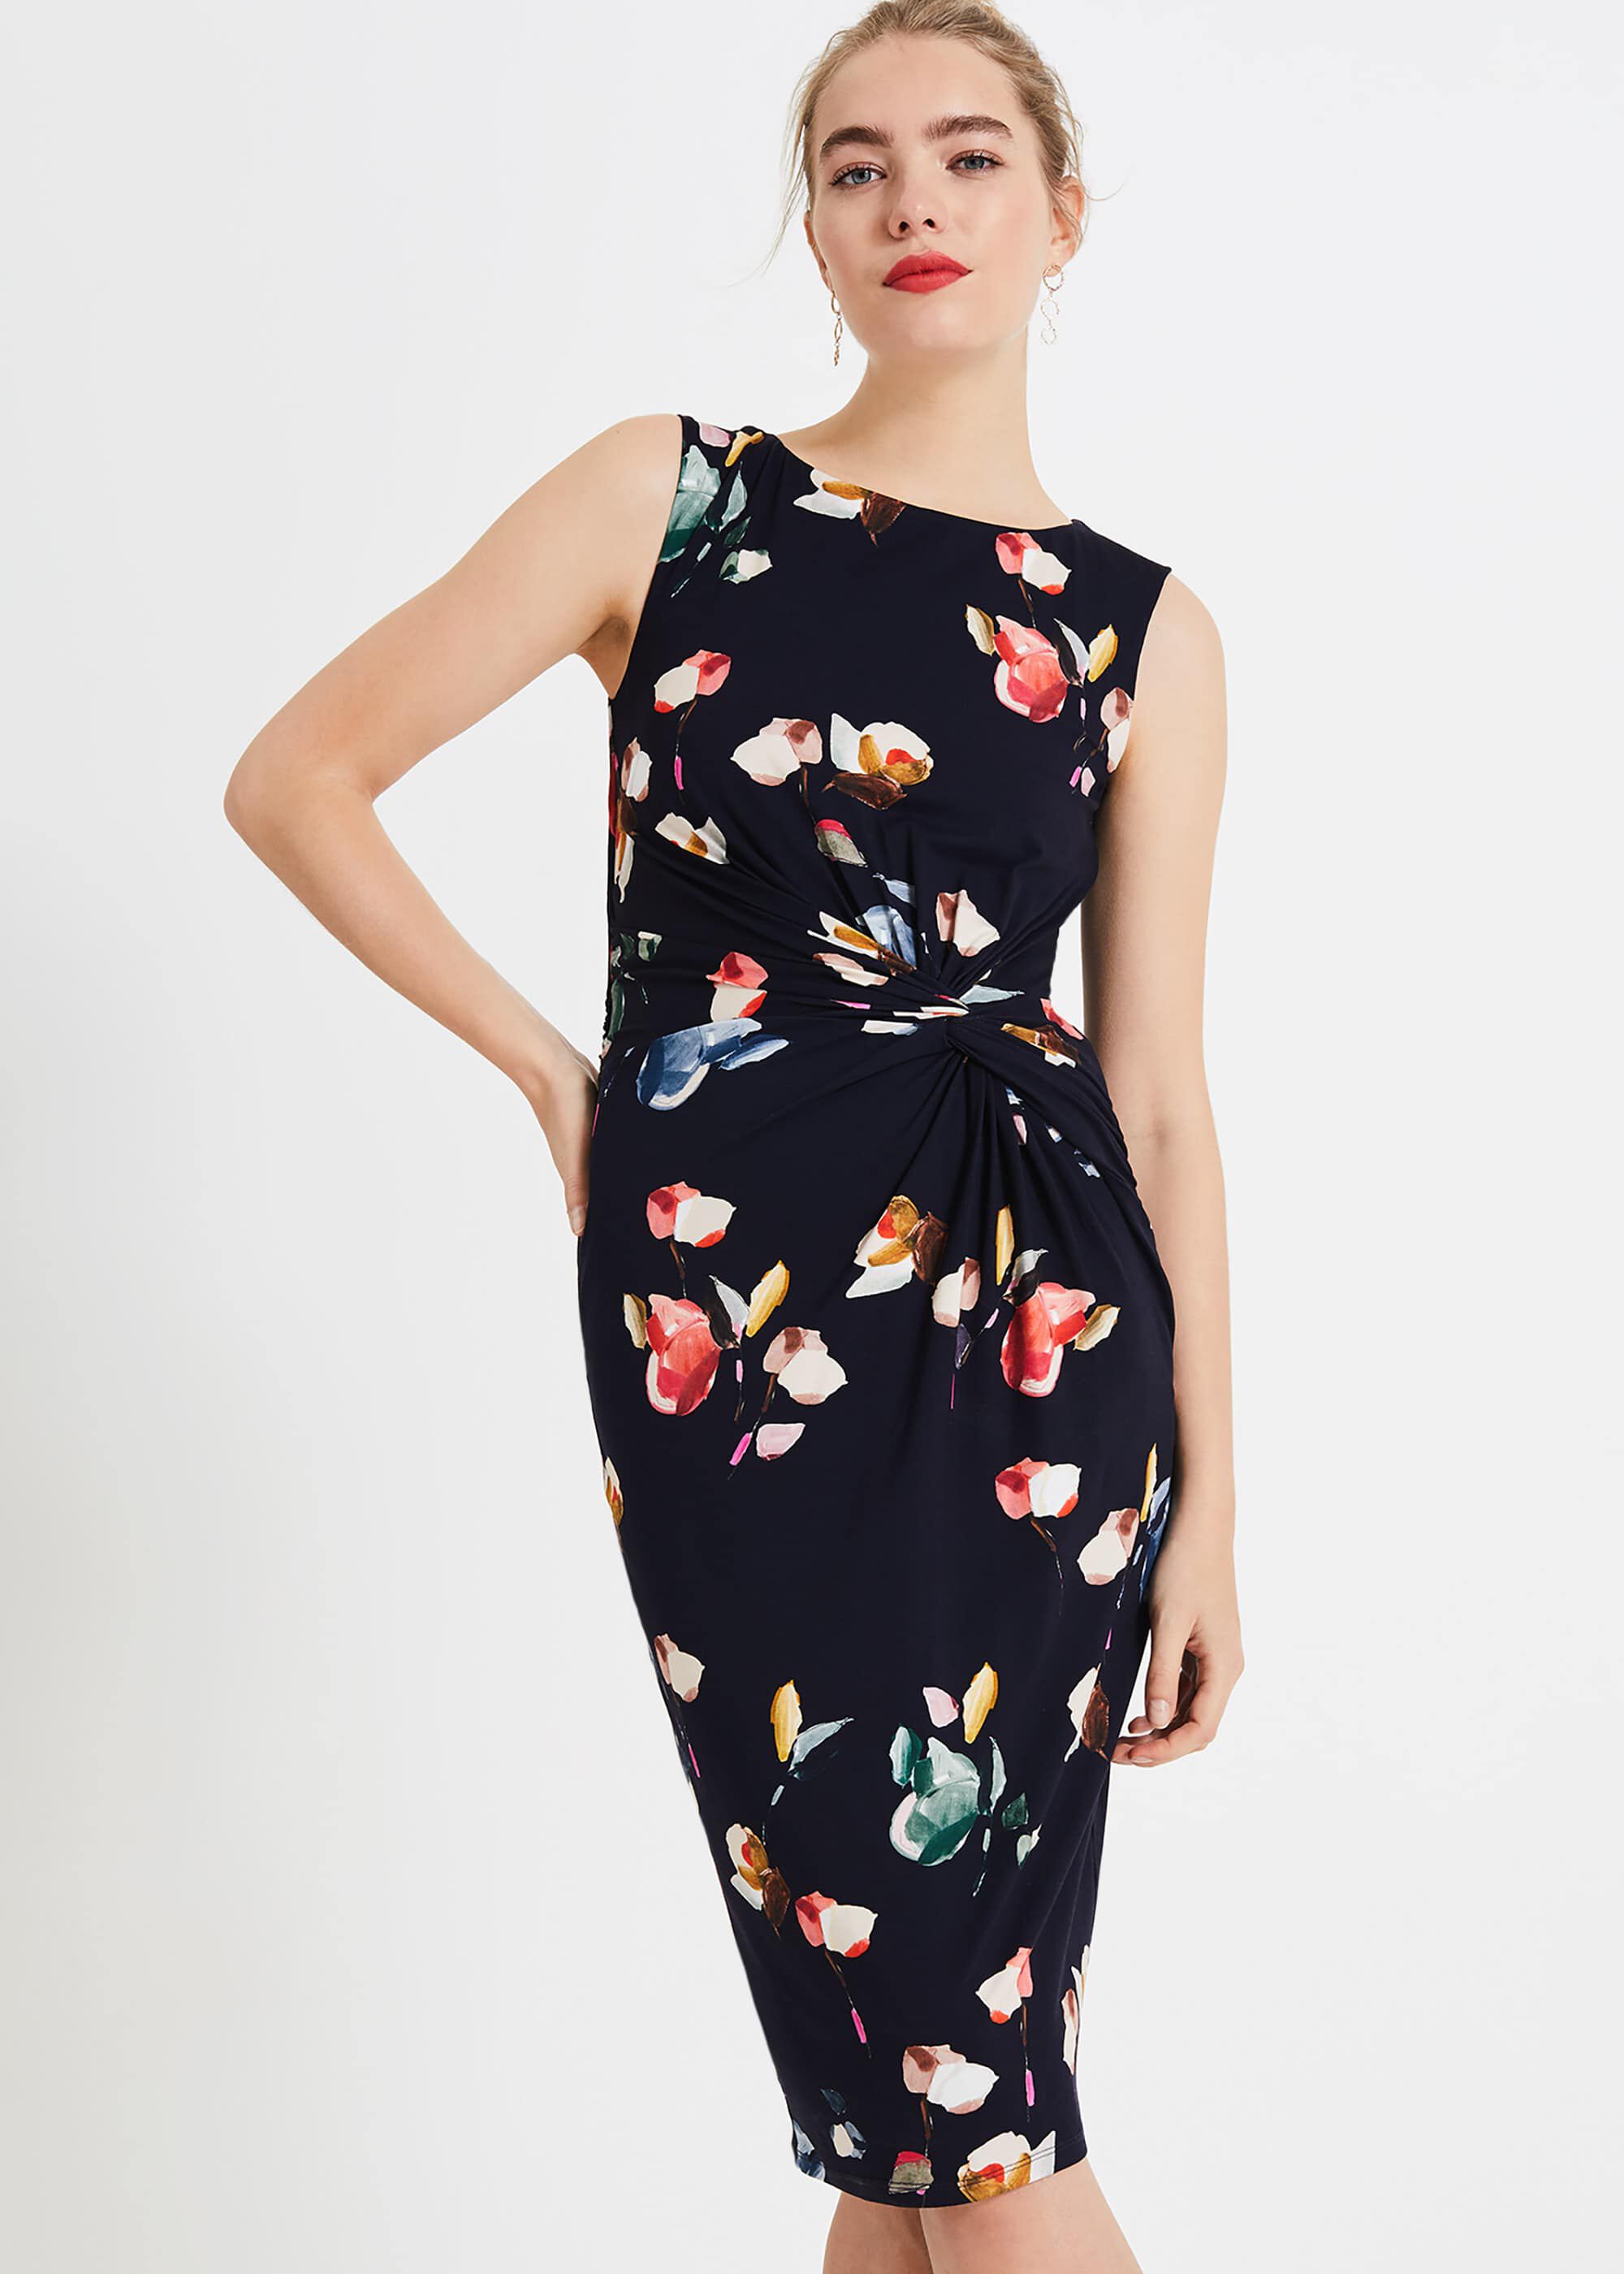 Berdina Floral Jersey Dress | Phase Eight